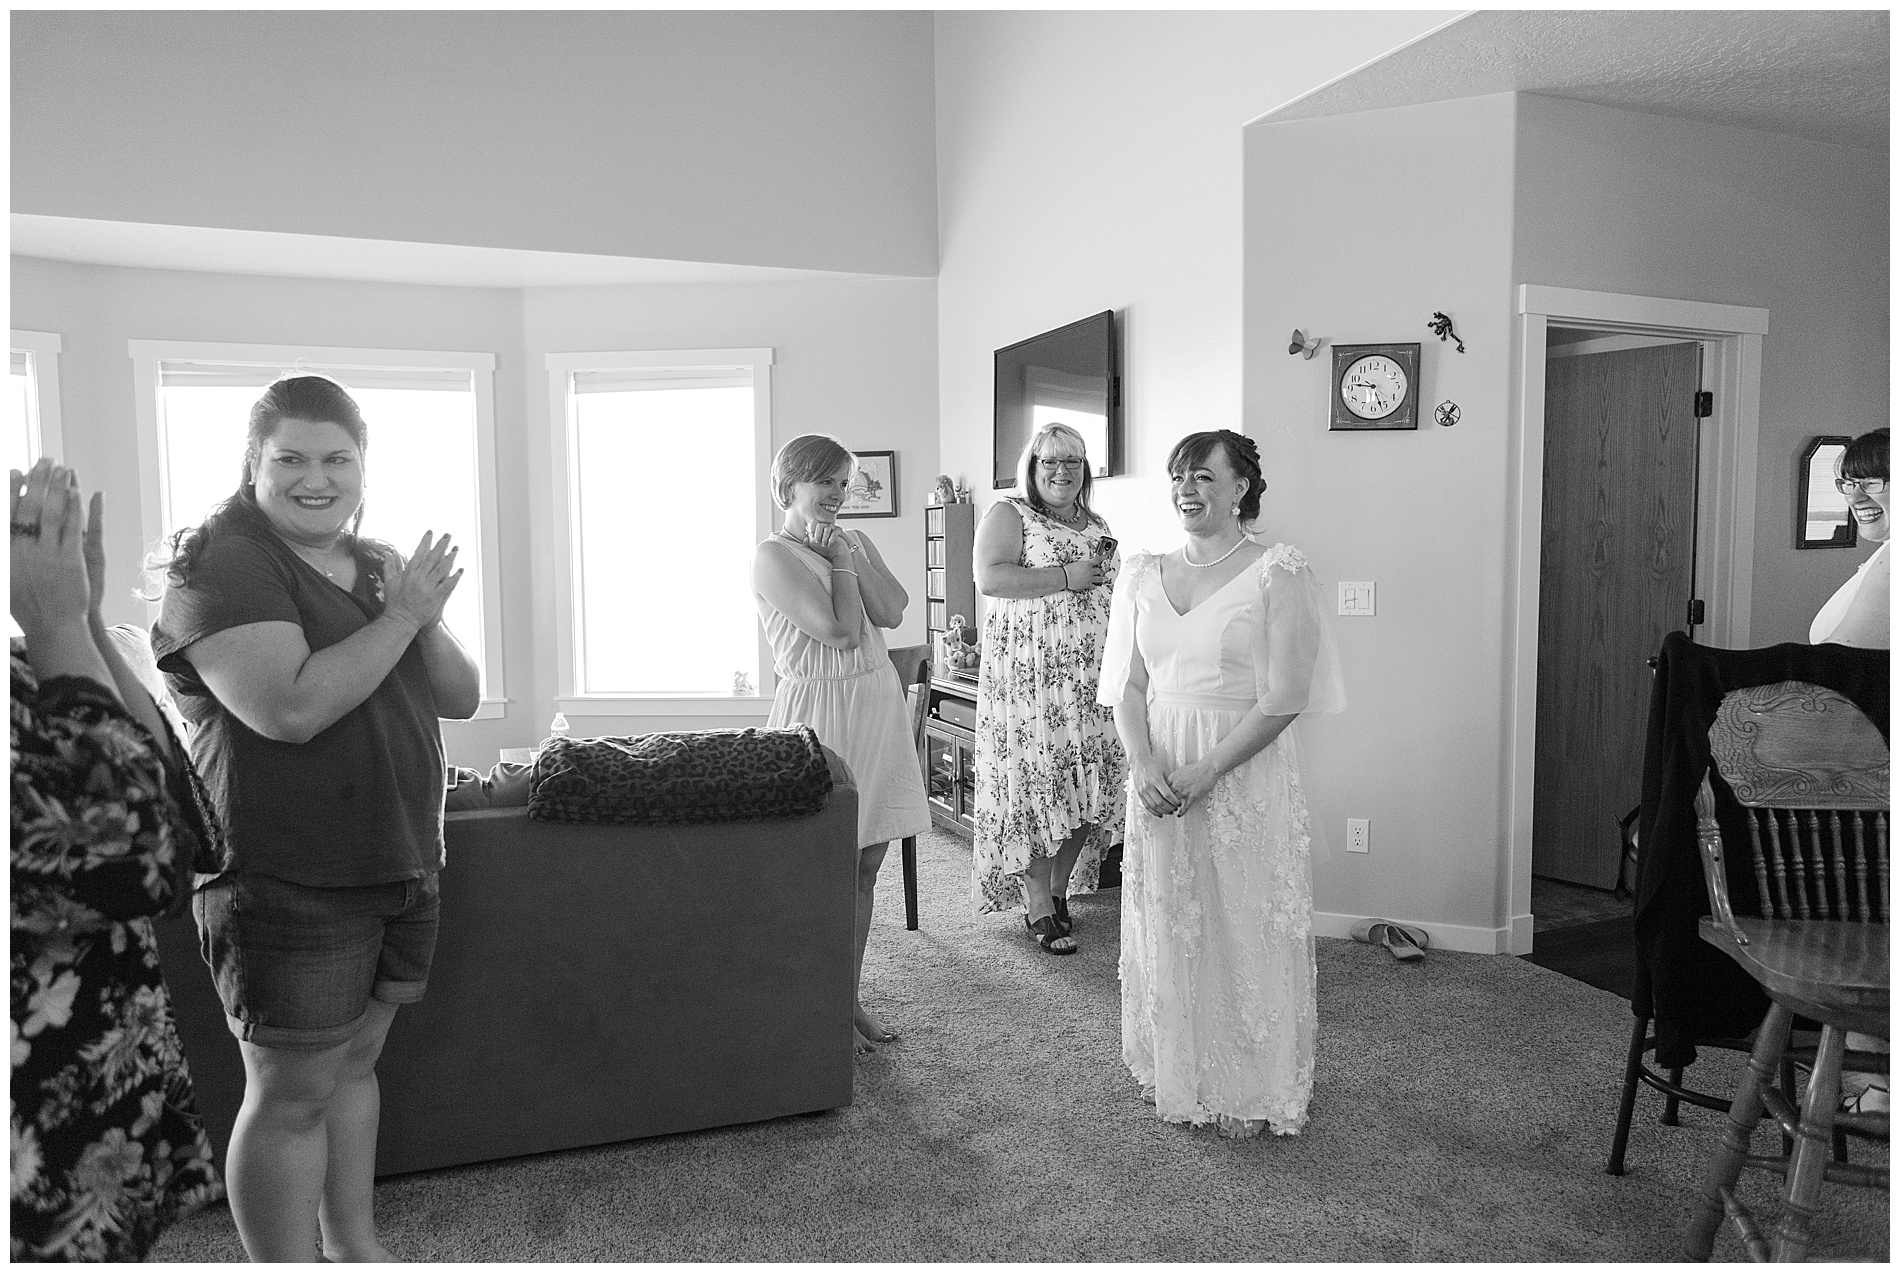 Everyone seeing the bride in her dress | Idaho wedding photographer | Robin Wheeler Photography